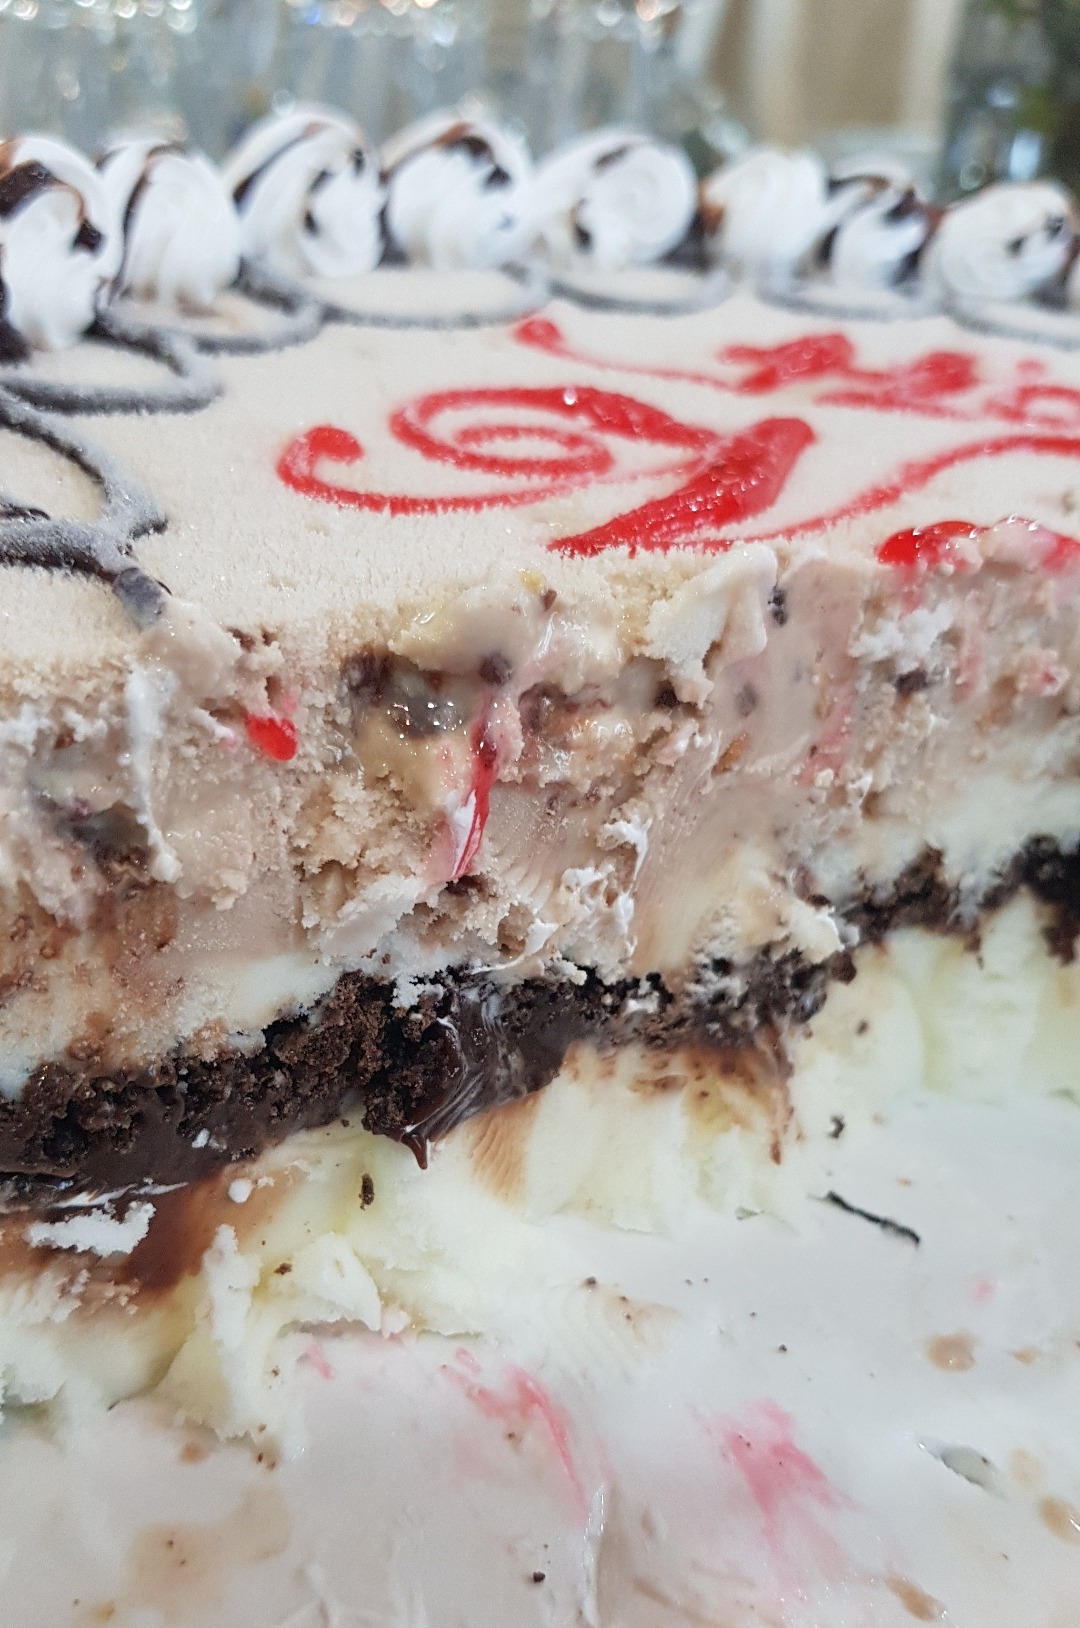 snickers #icecream cake @ ديري كوين - البحرين